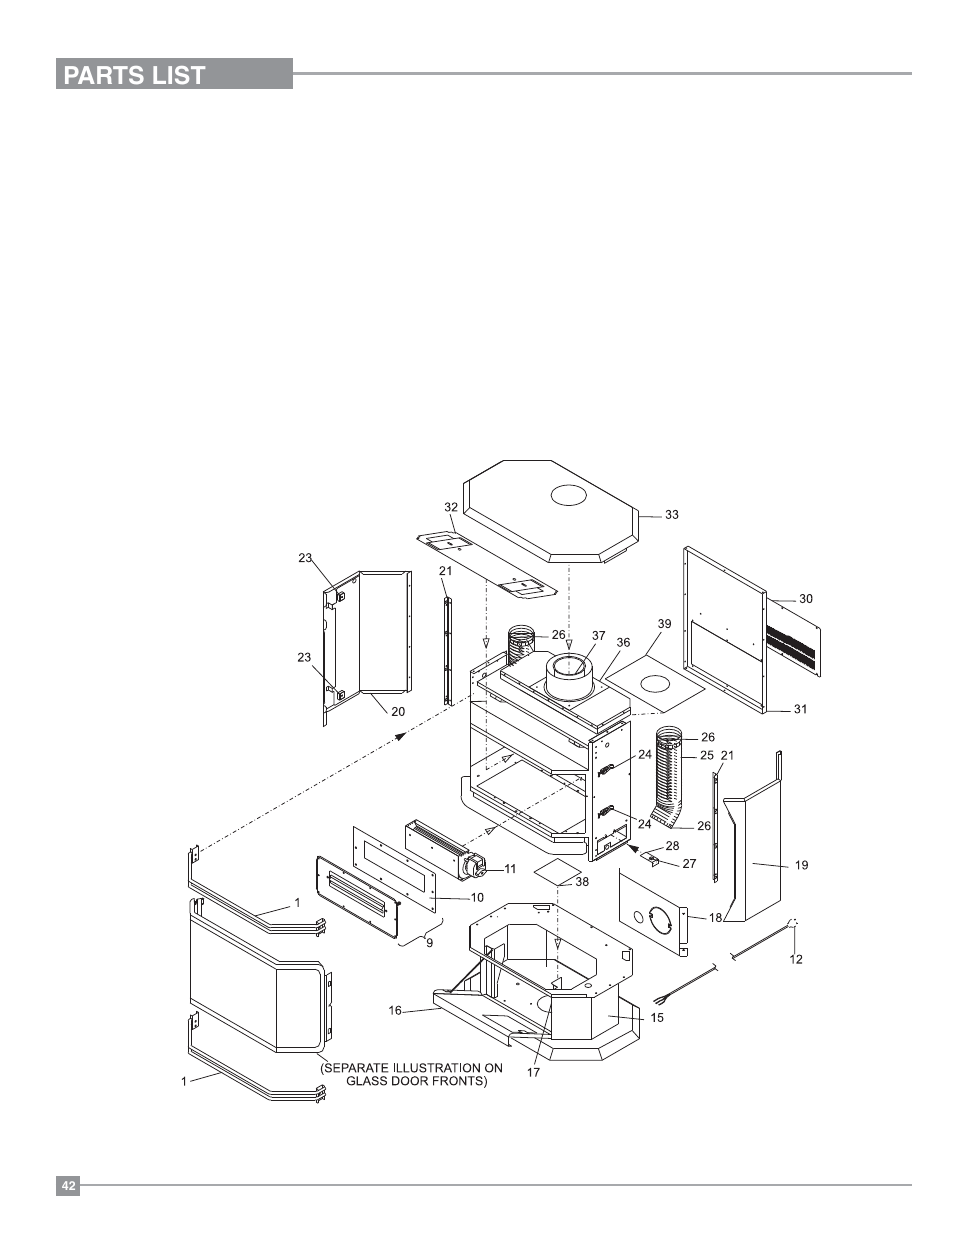 Parts list, Main assembly | Regency Ultimate U39 Medium Gas Stove User